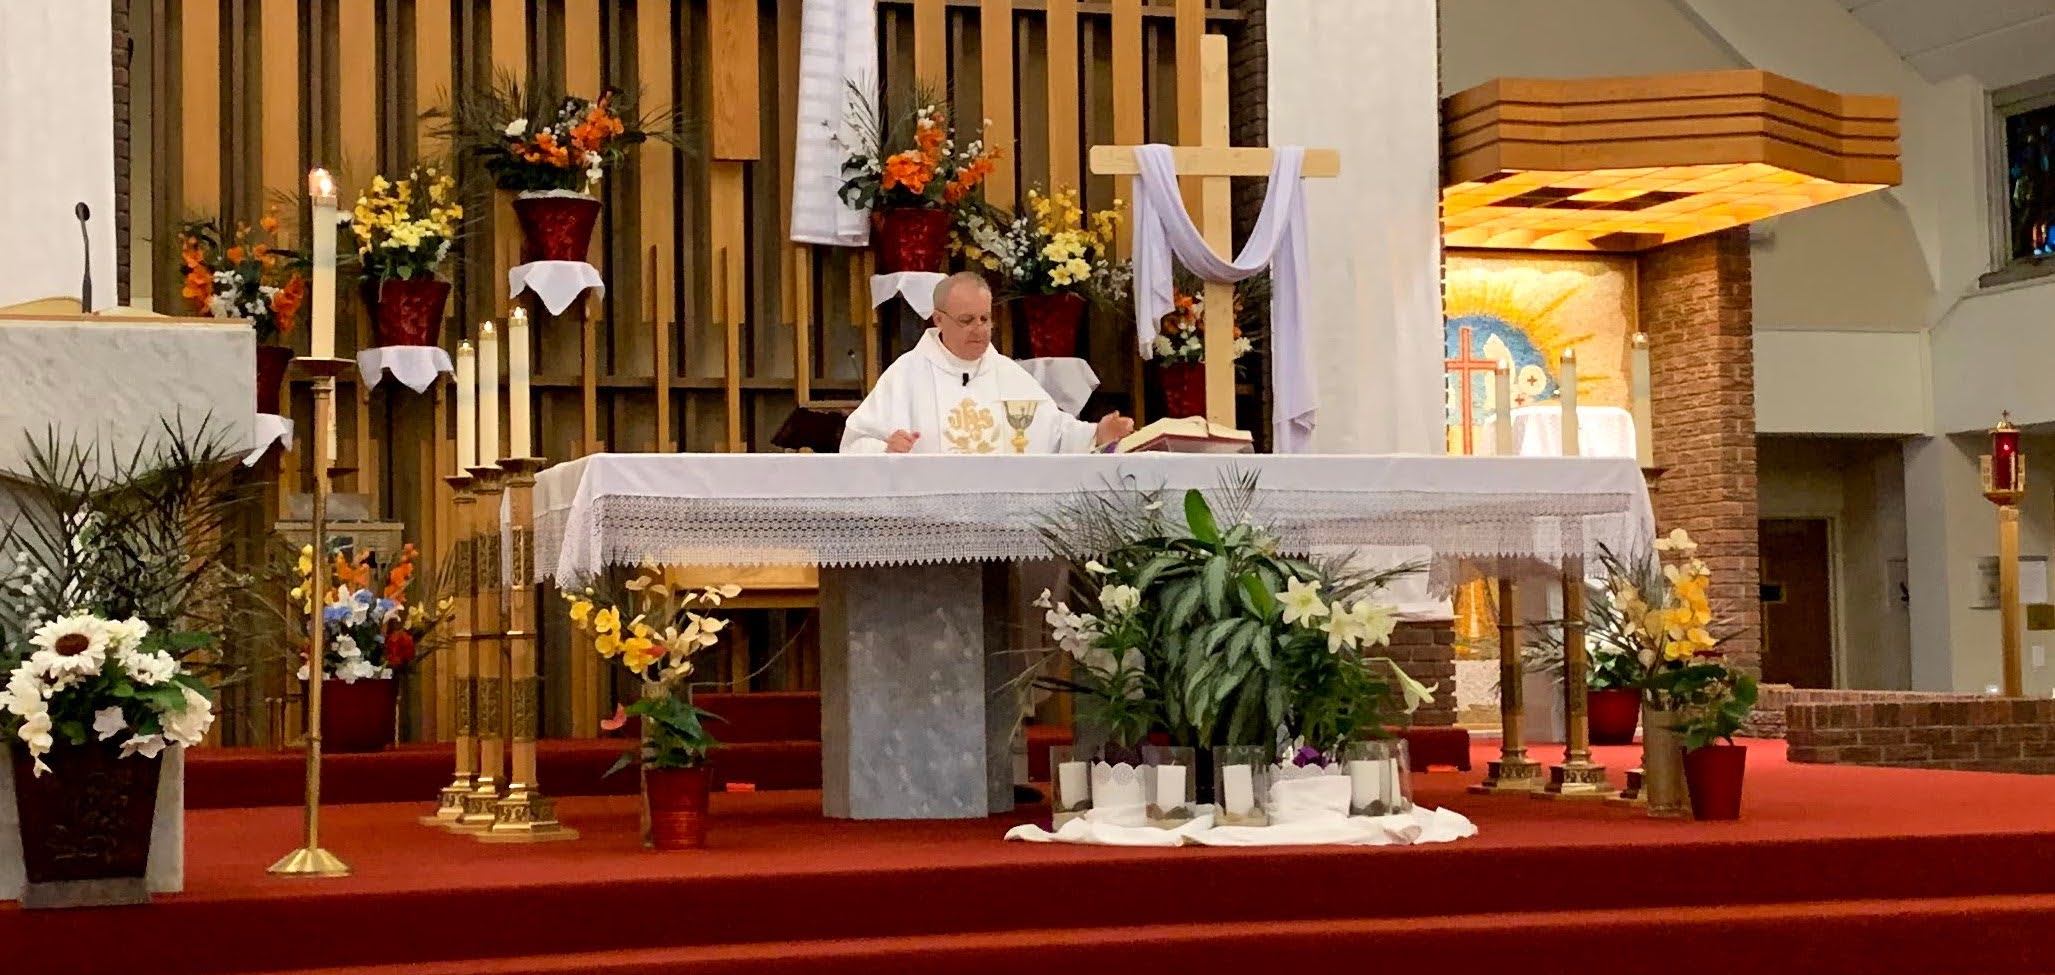 Fr. Liborio at the altar